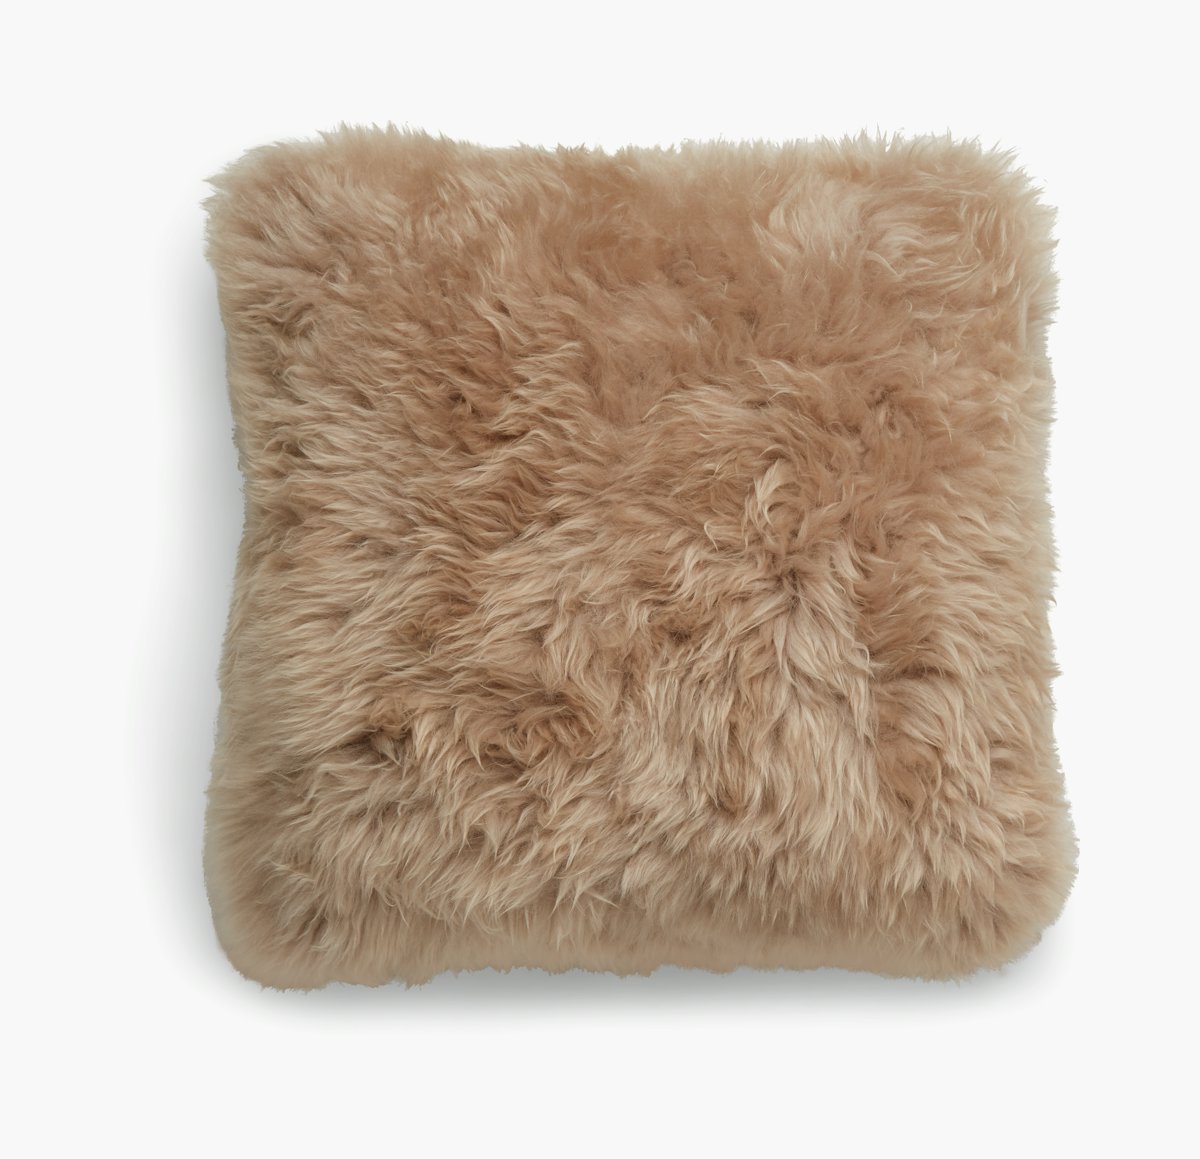 Sheepskin Pillow, Long